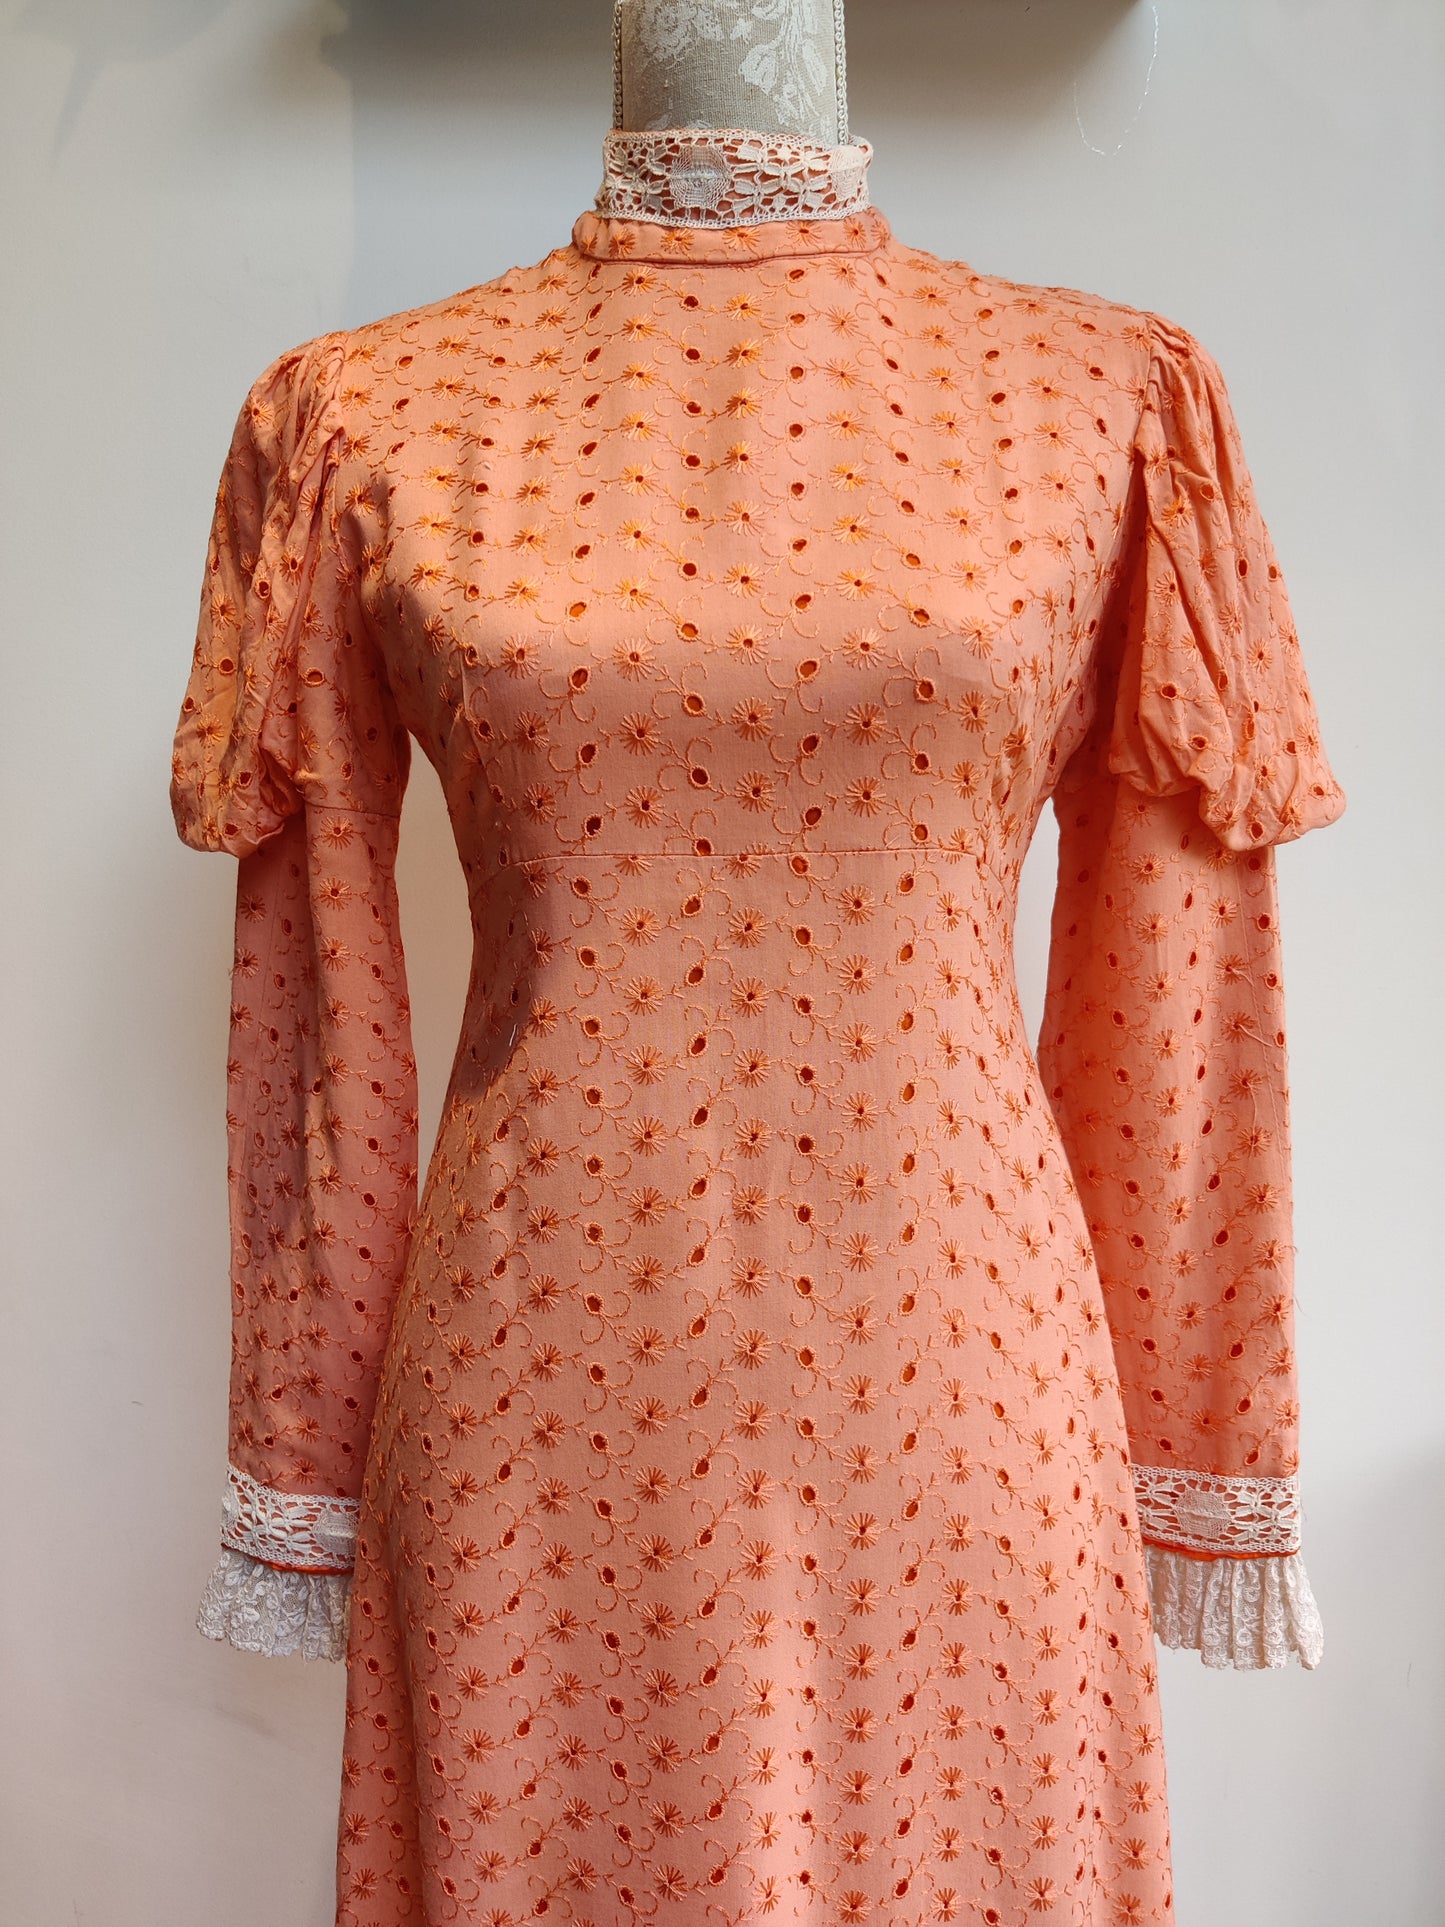 Beautiful peach 70s prairie dress with lace trim. Size 10.